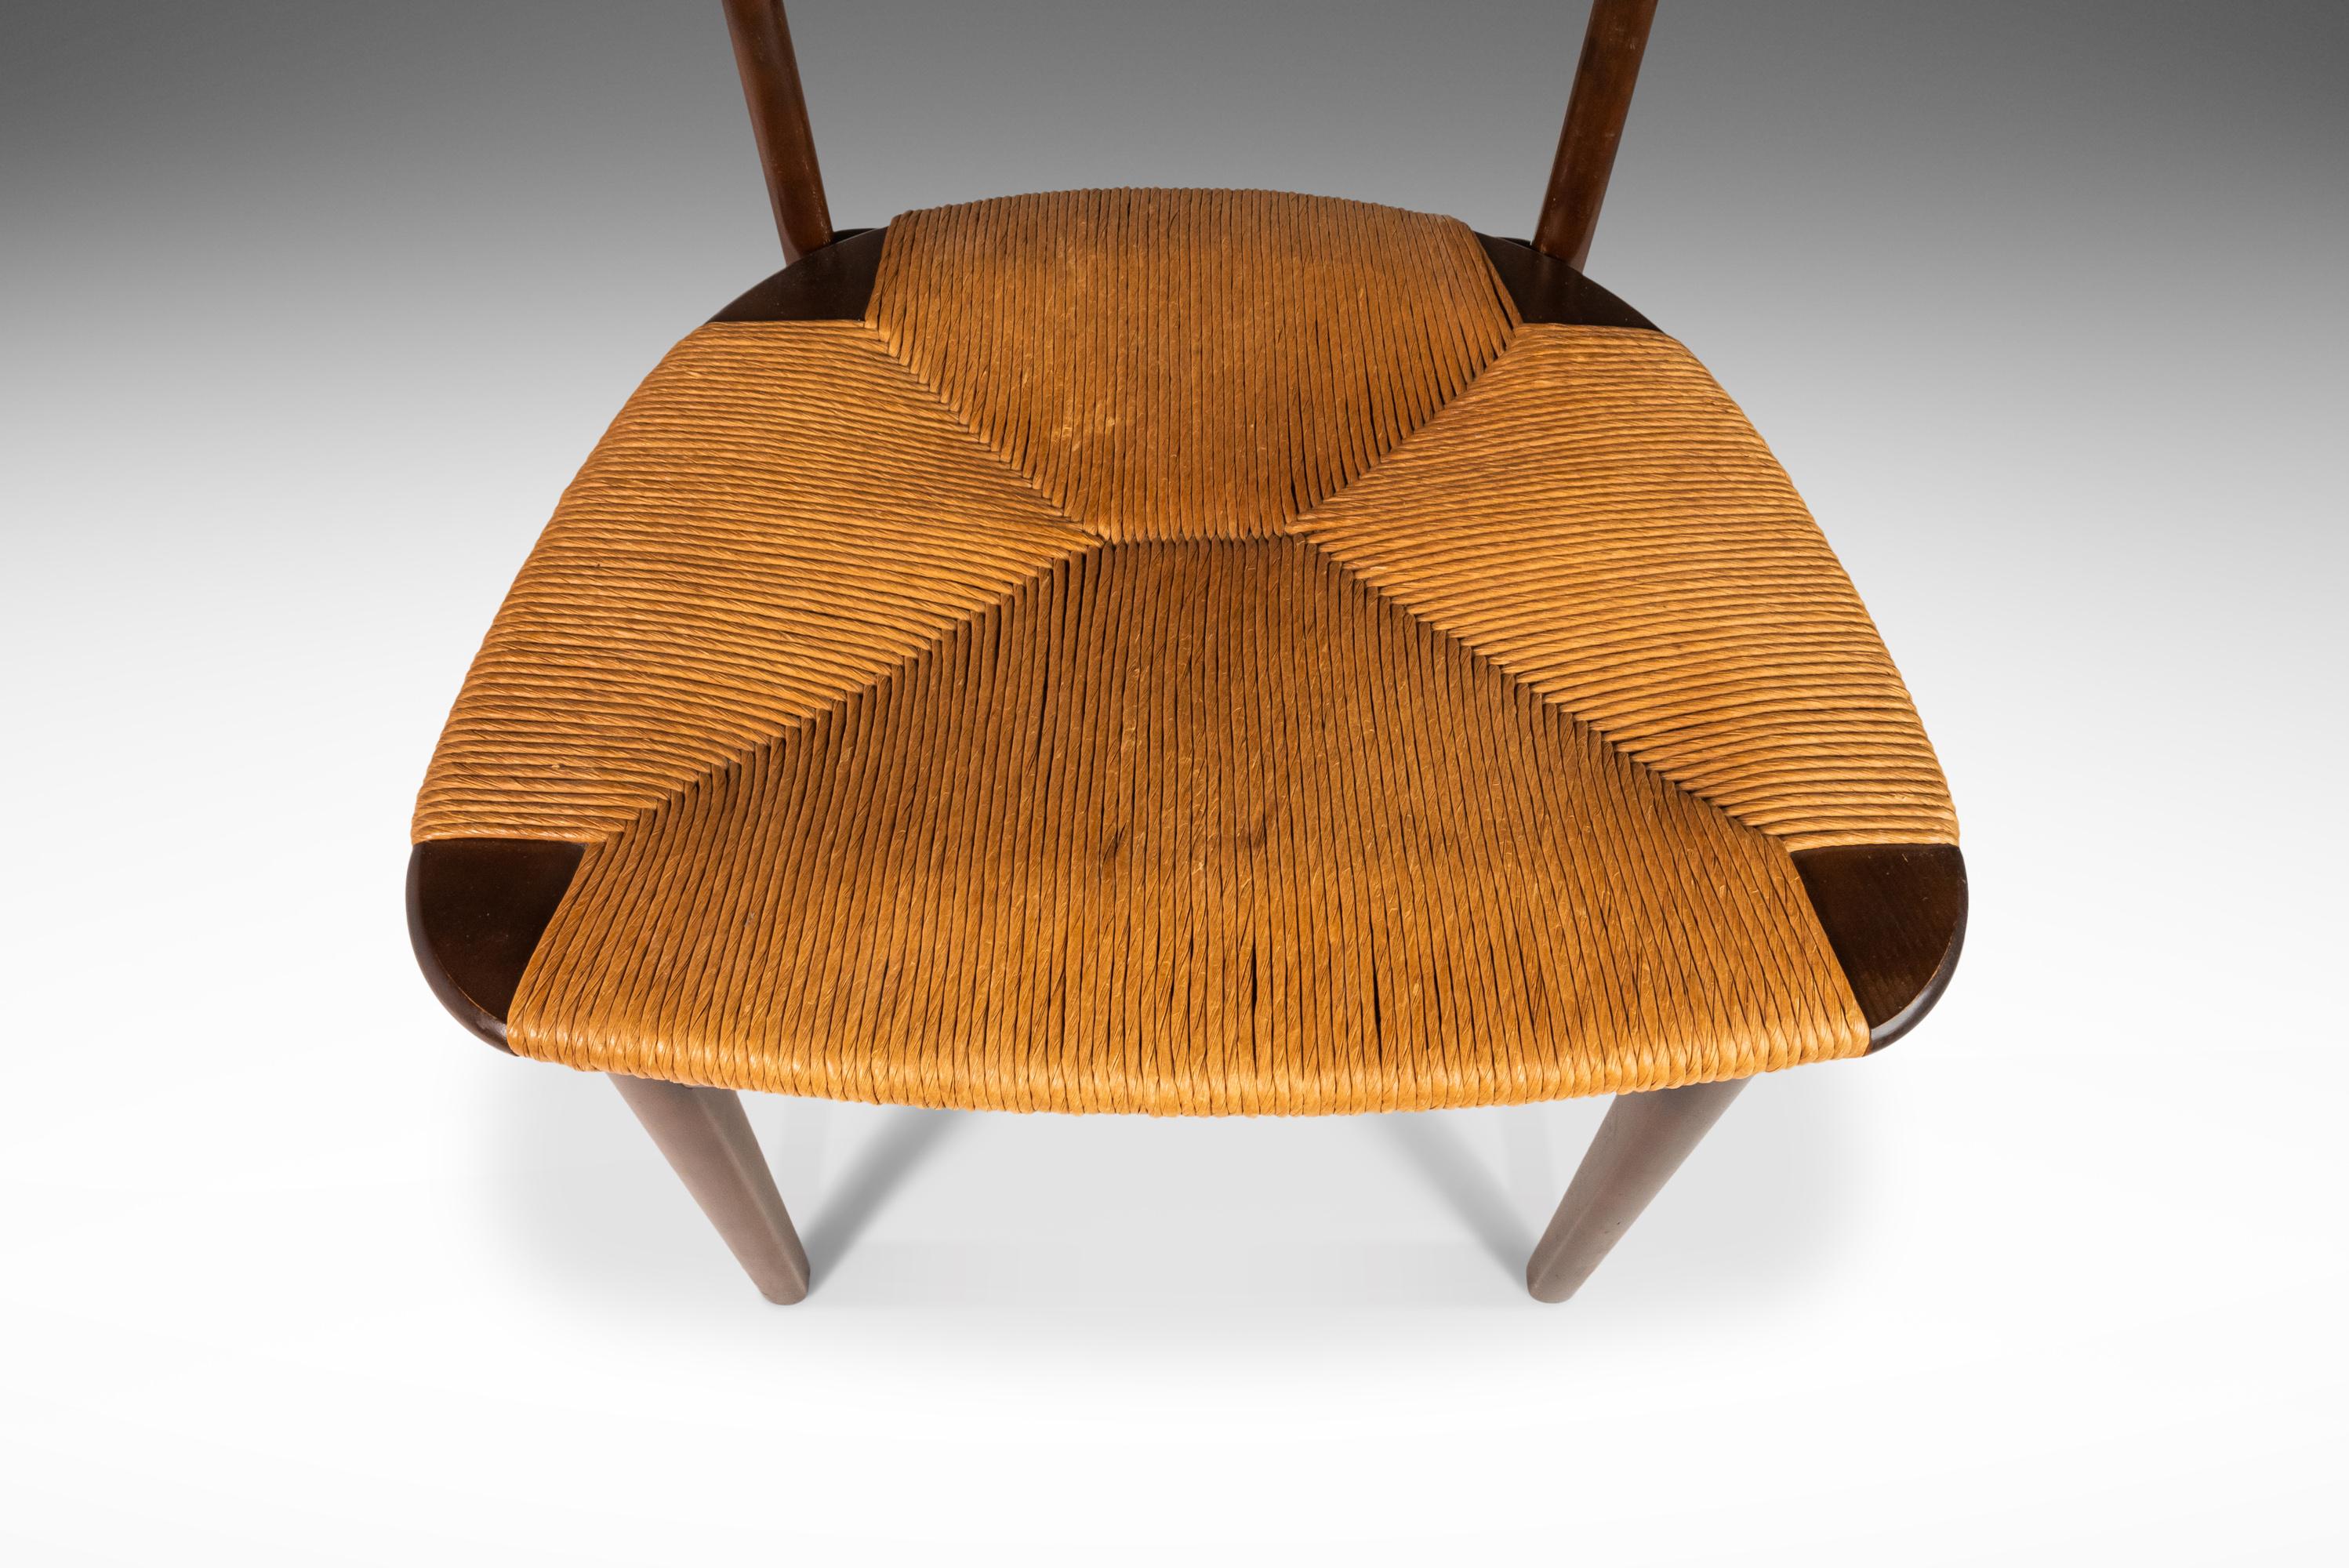 Set of Four (4) Danish Modern Thrush Dining Chairs After Hans J. Wegner, c. 1960 For Sale 6